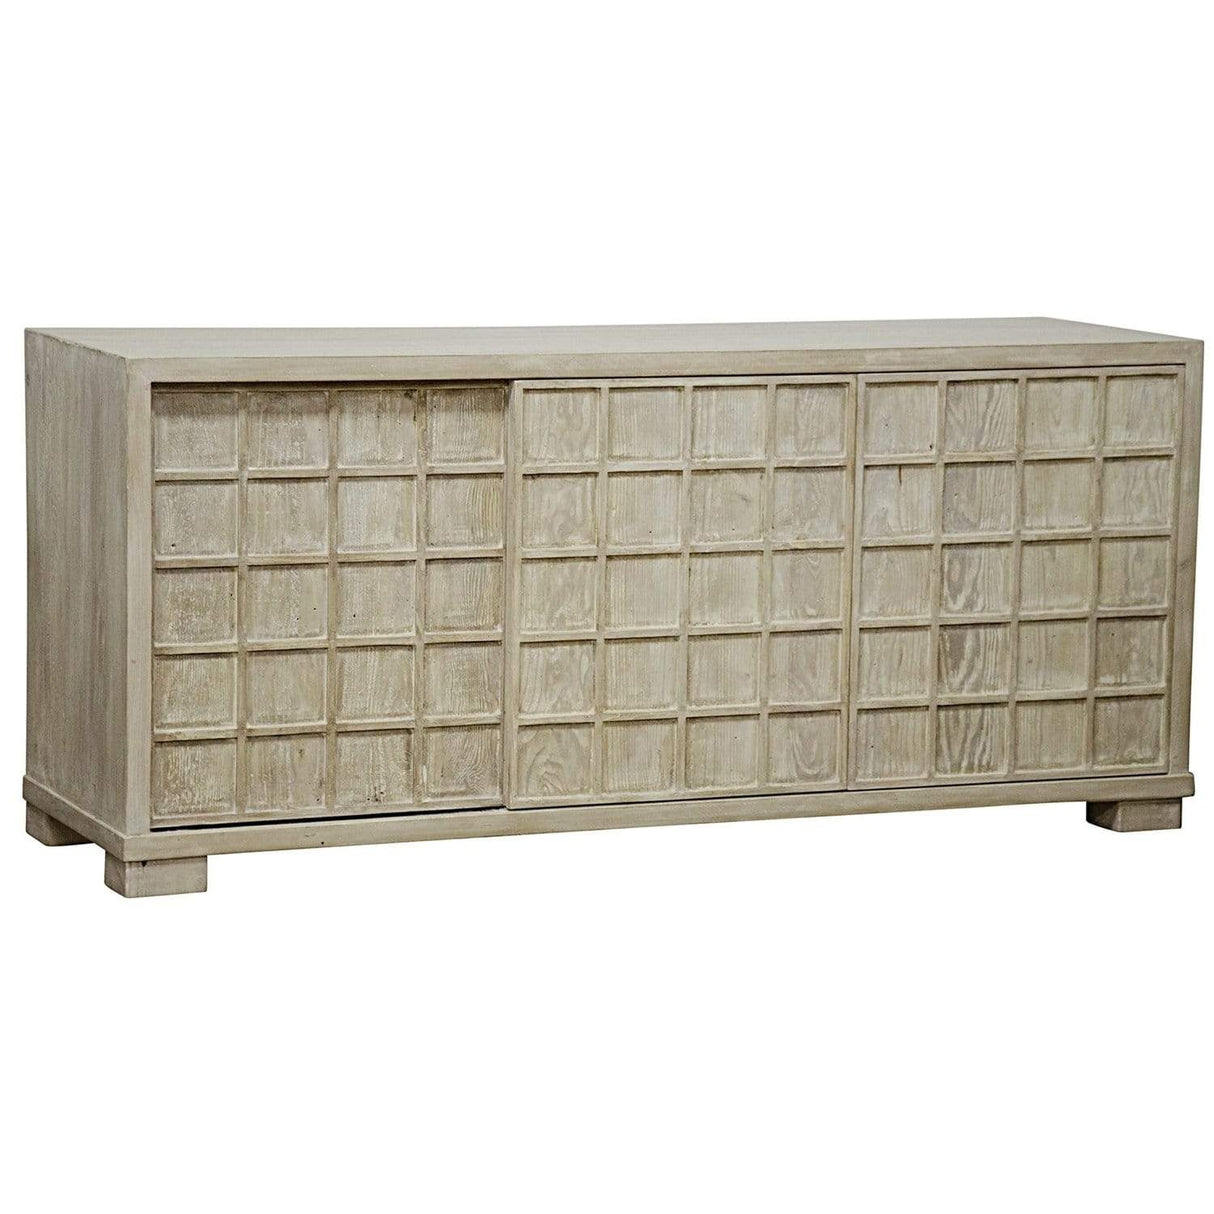 CFC Hayward Sideboard Furniture CFC-OW299 00818484020625